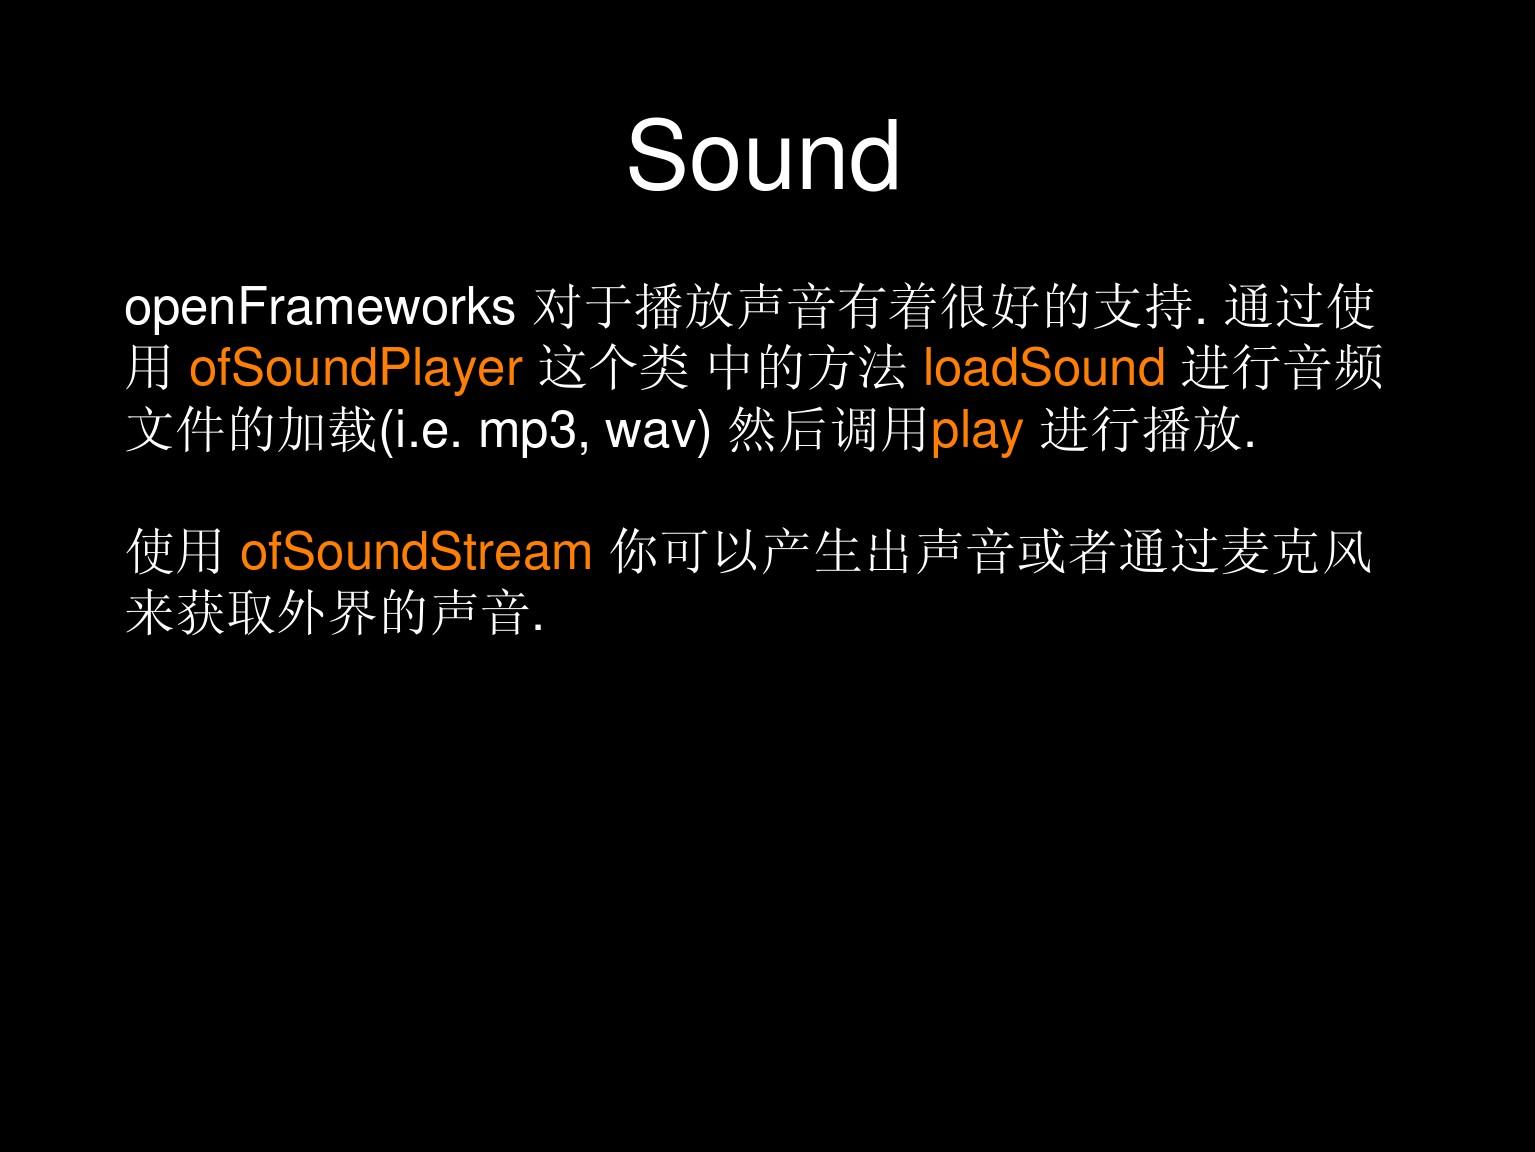 openframeworks-Sound-中文